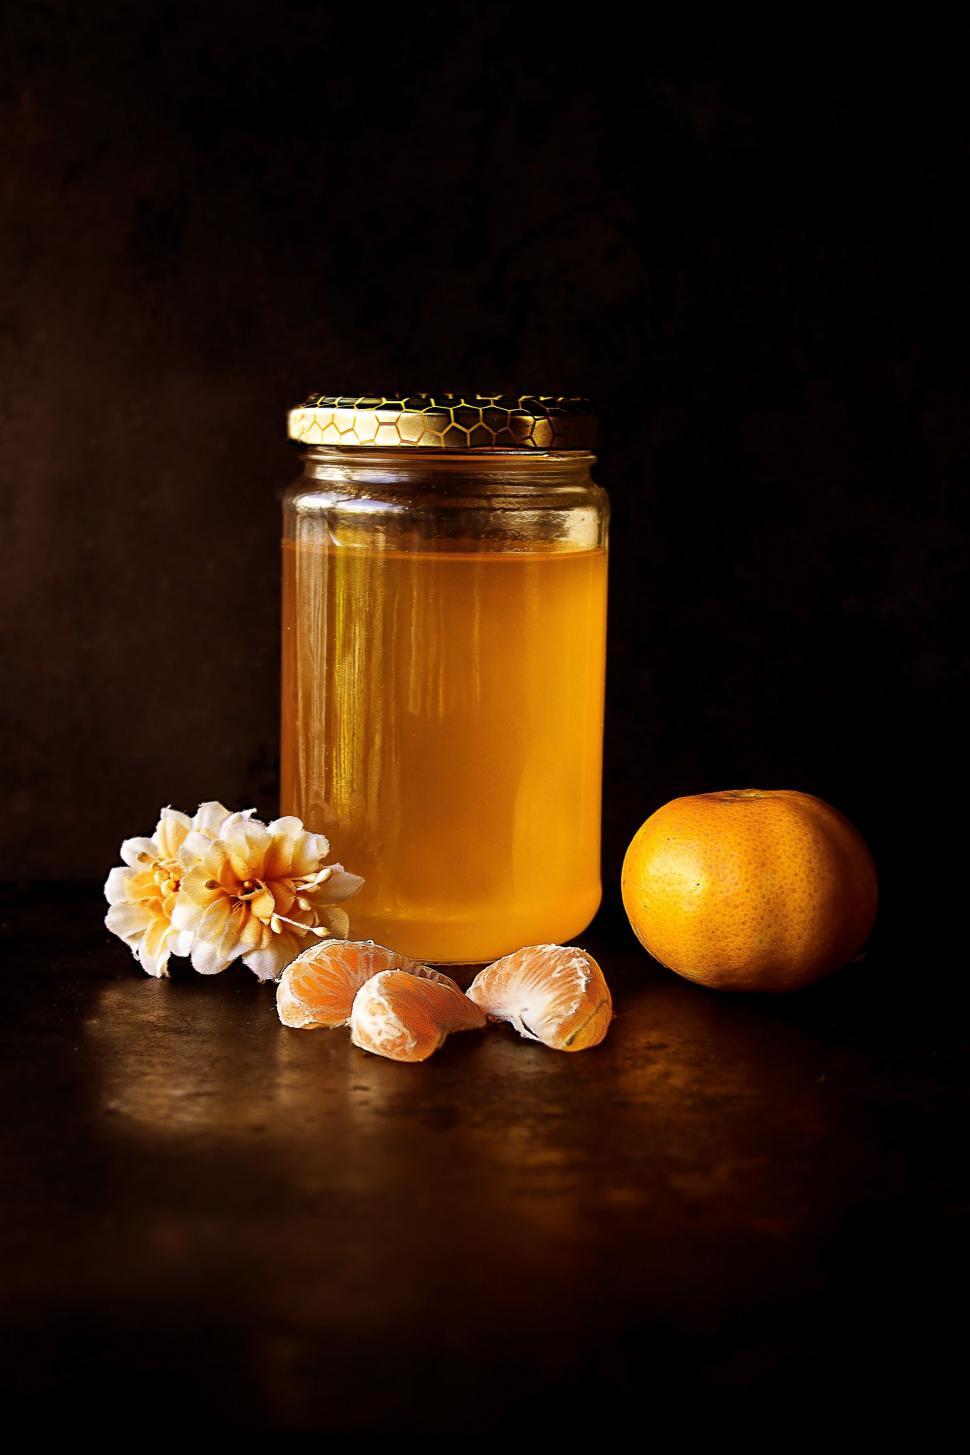 Free Image of Jar of Honey, Lemon, and Flowers 